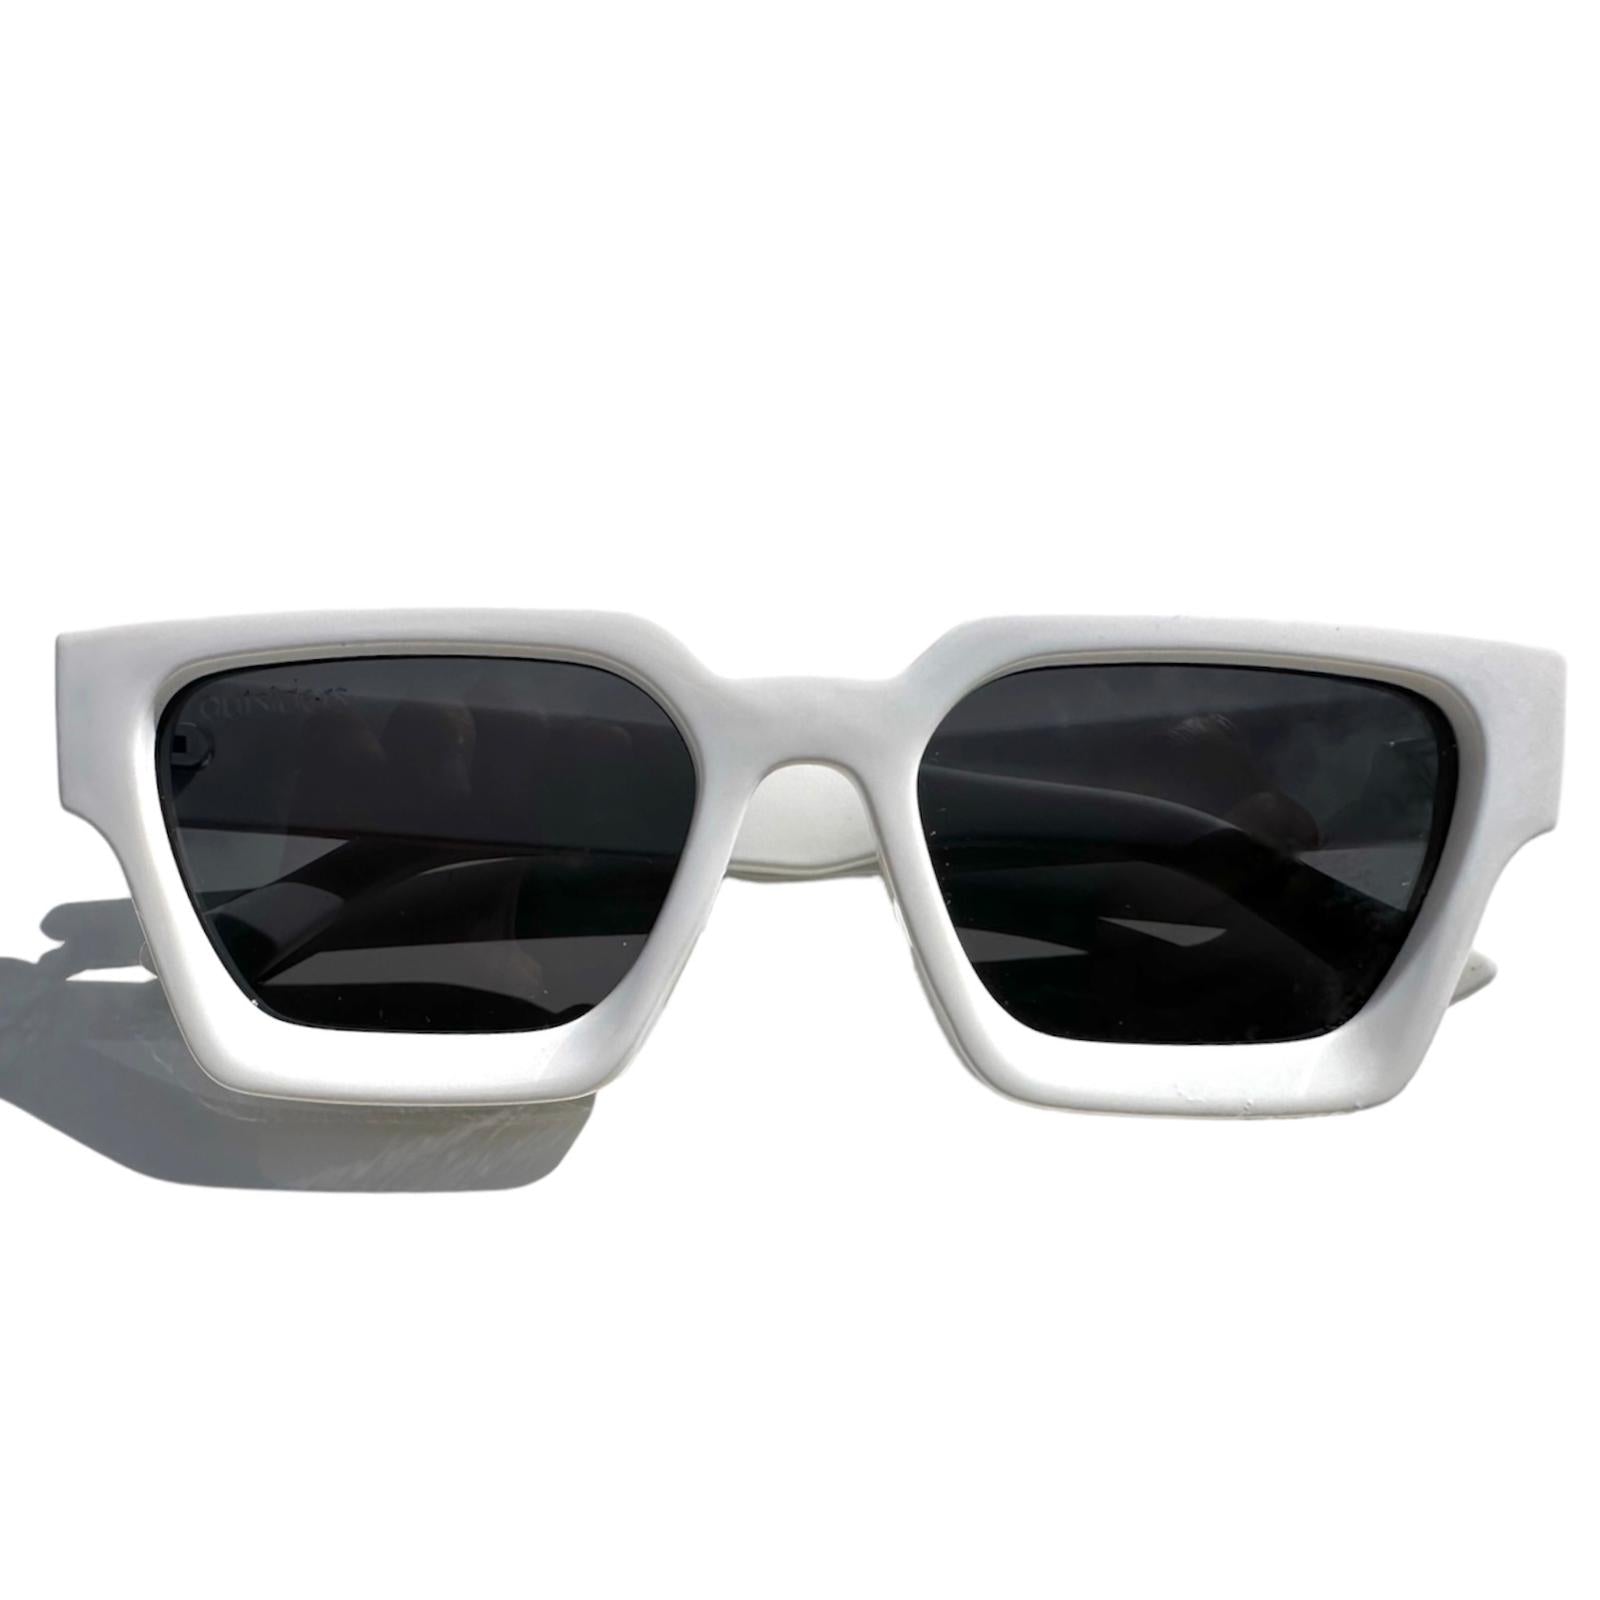 Outsiders - Waved Sunglasses - White